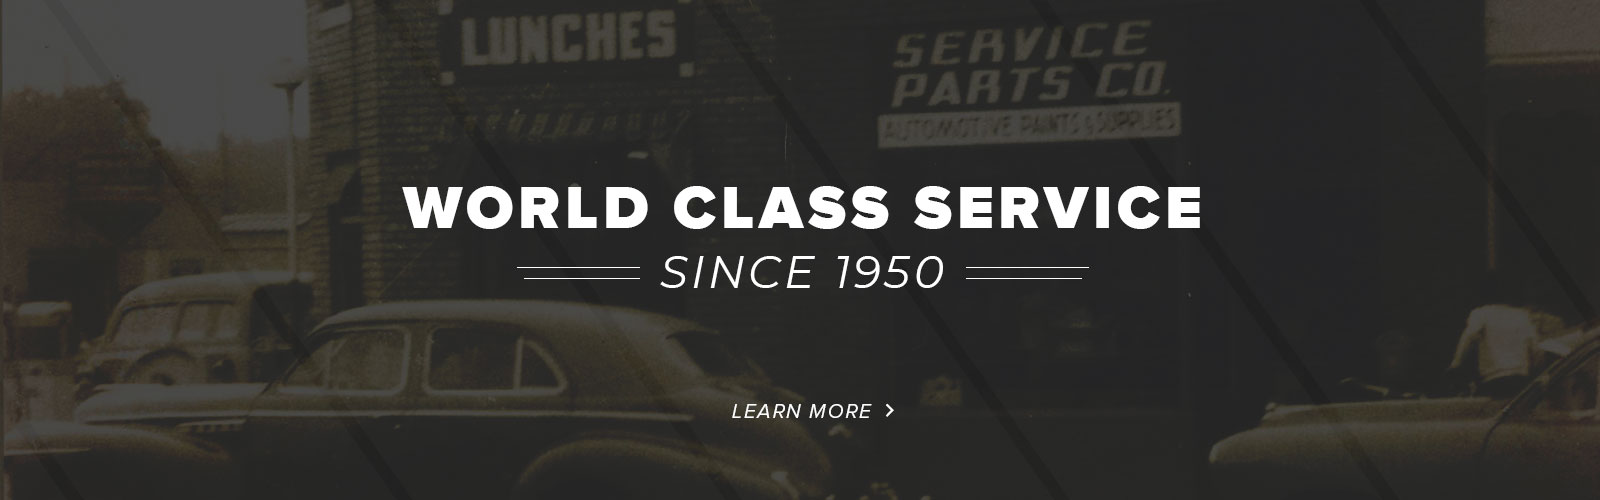 Word class service since 1950